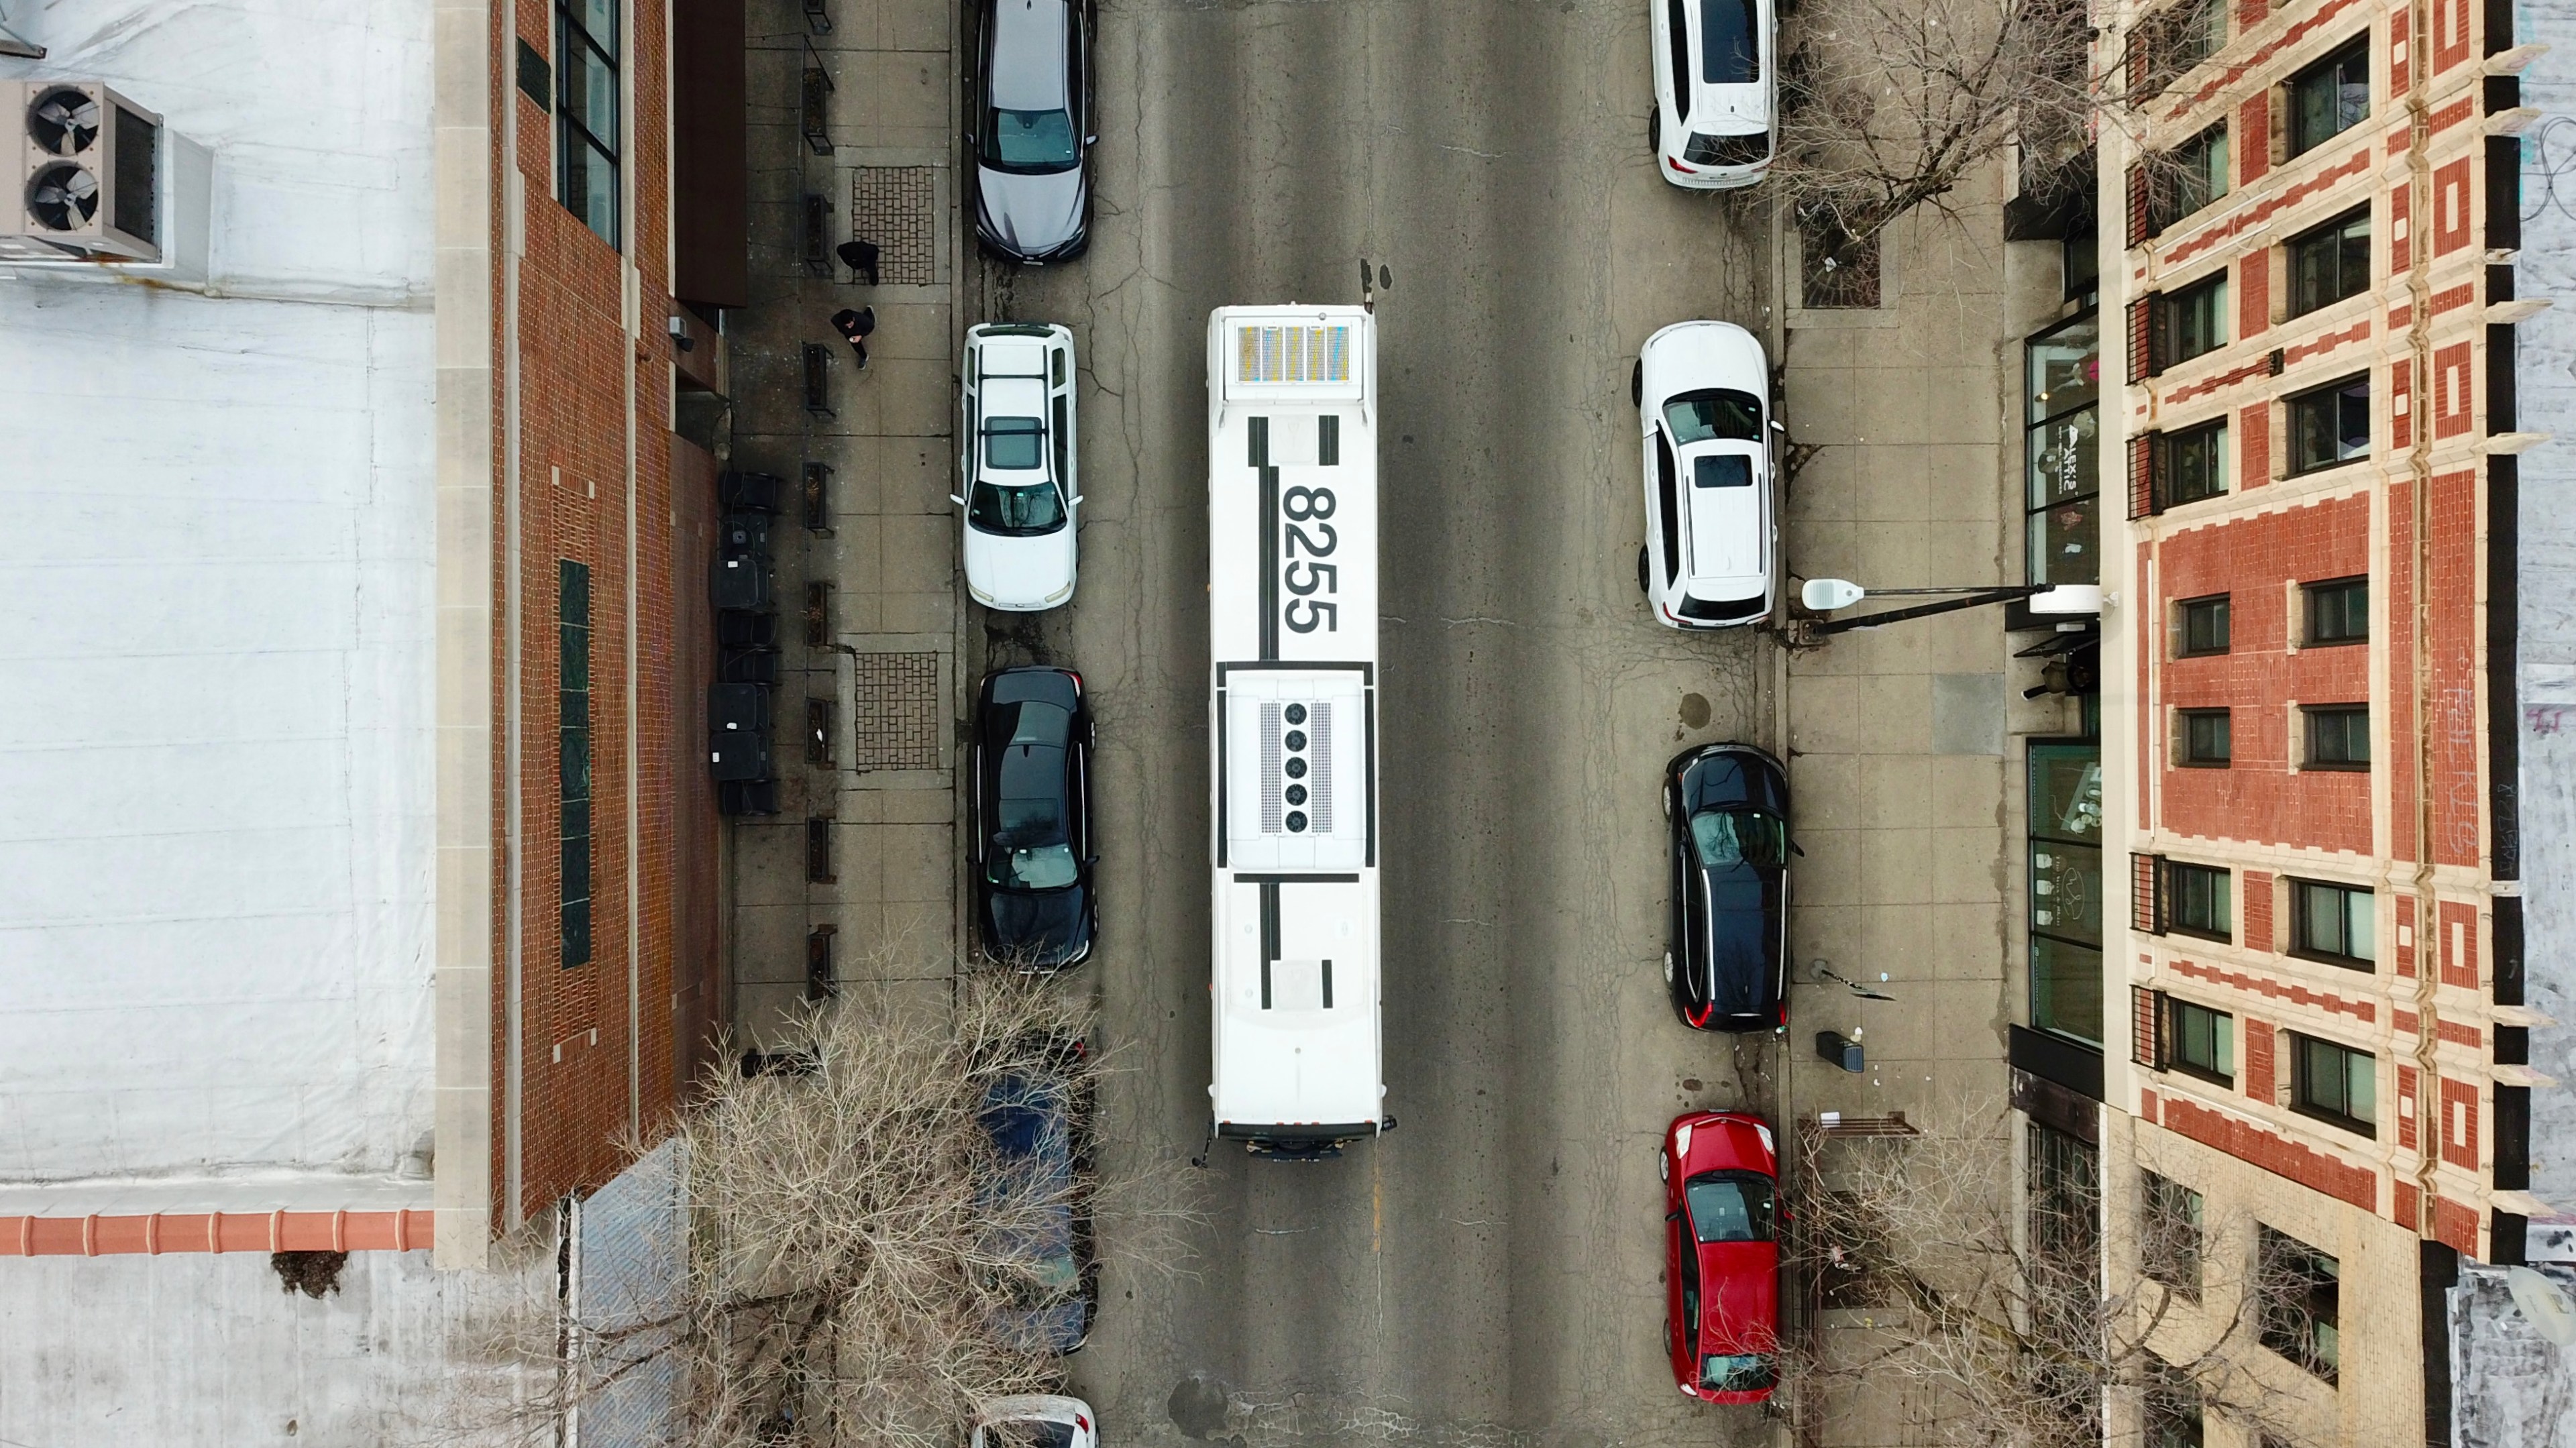 A bus on Milwaukee Avenue seen from the sky